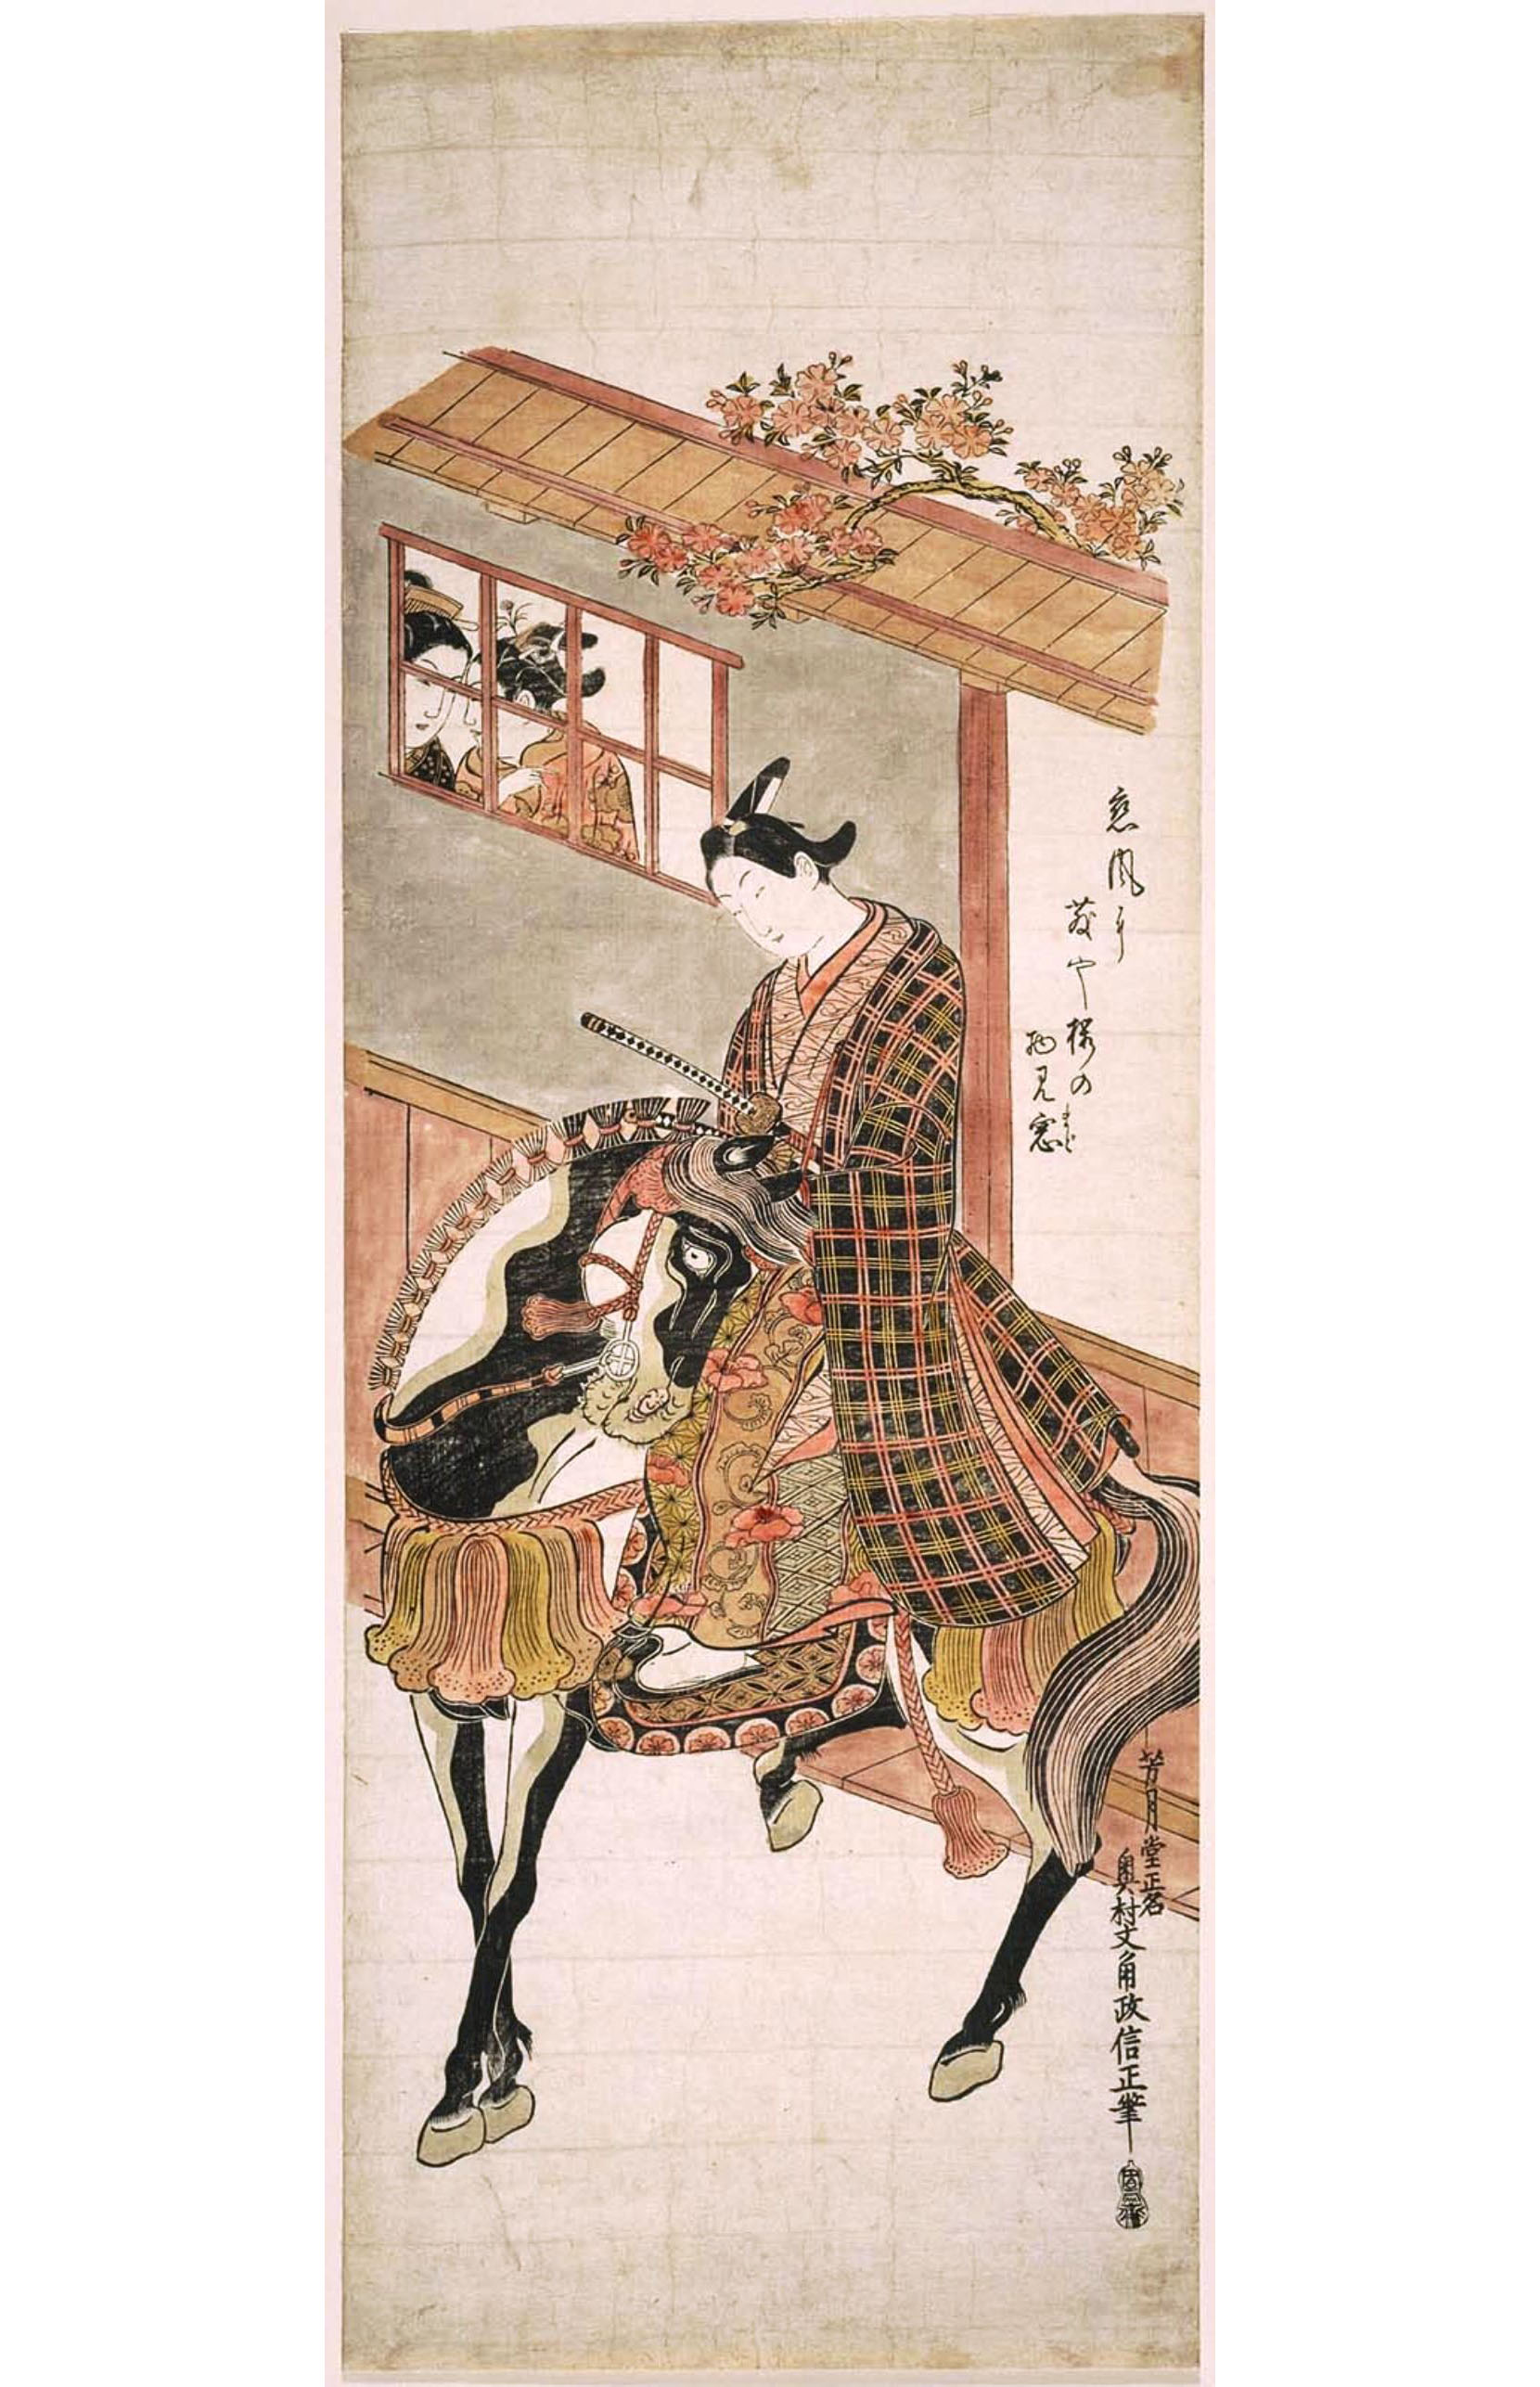 Окумура Масанобу. "Молодой самурай на коне". 1743-1747.